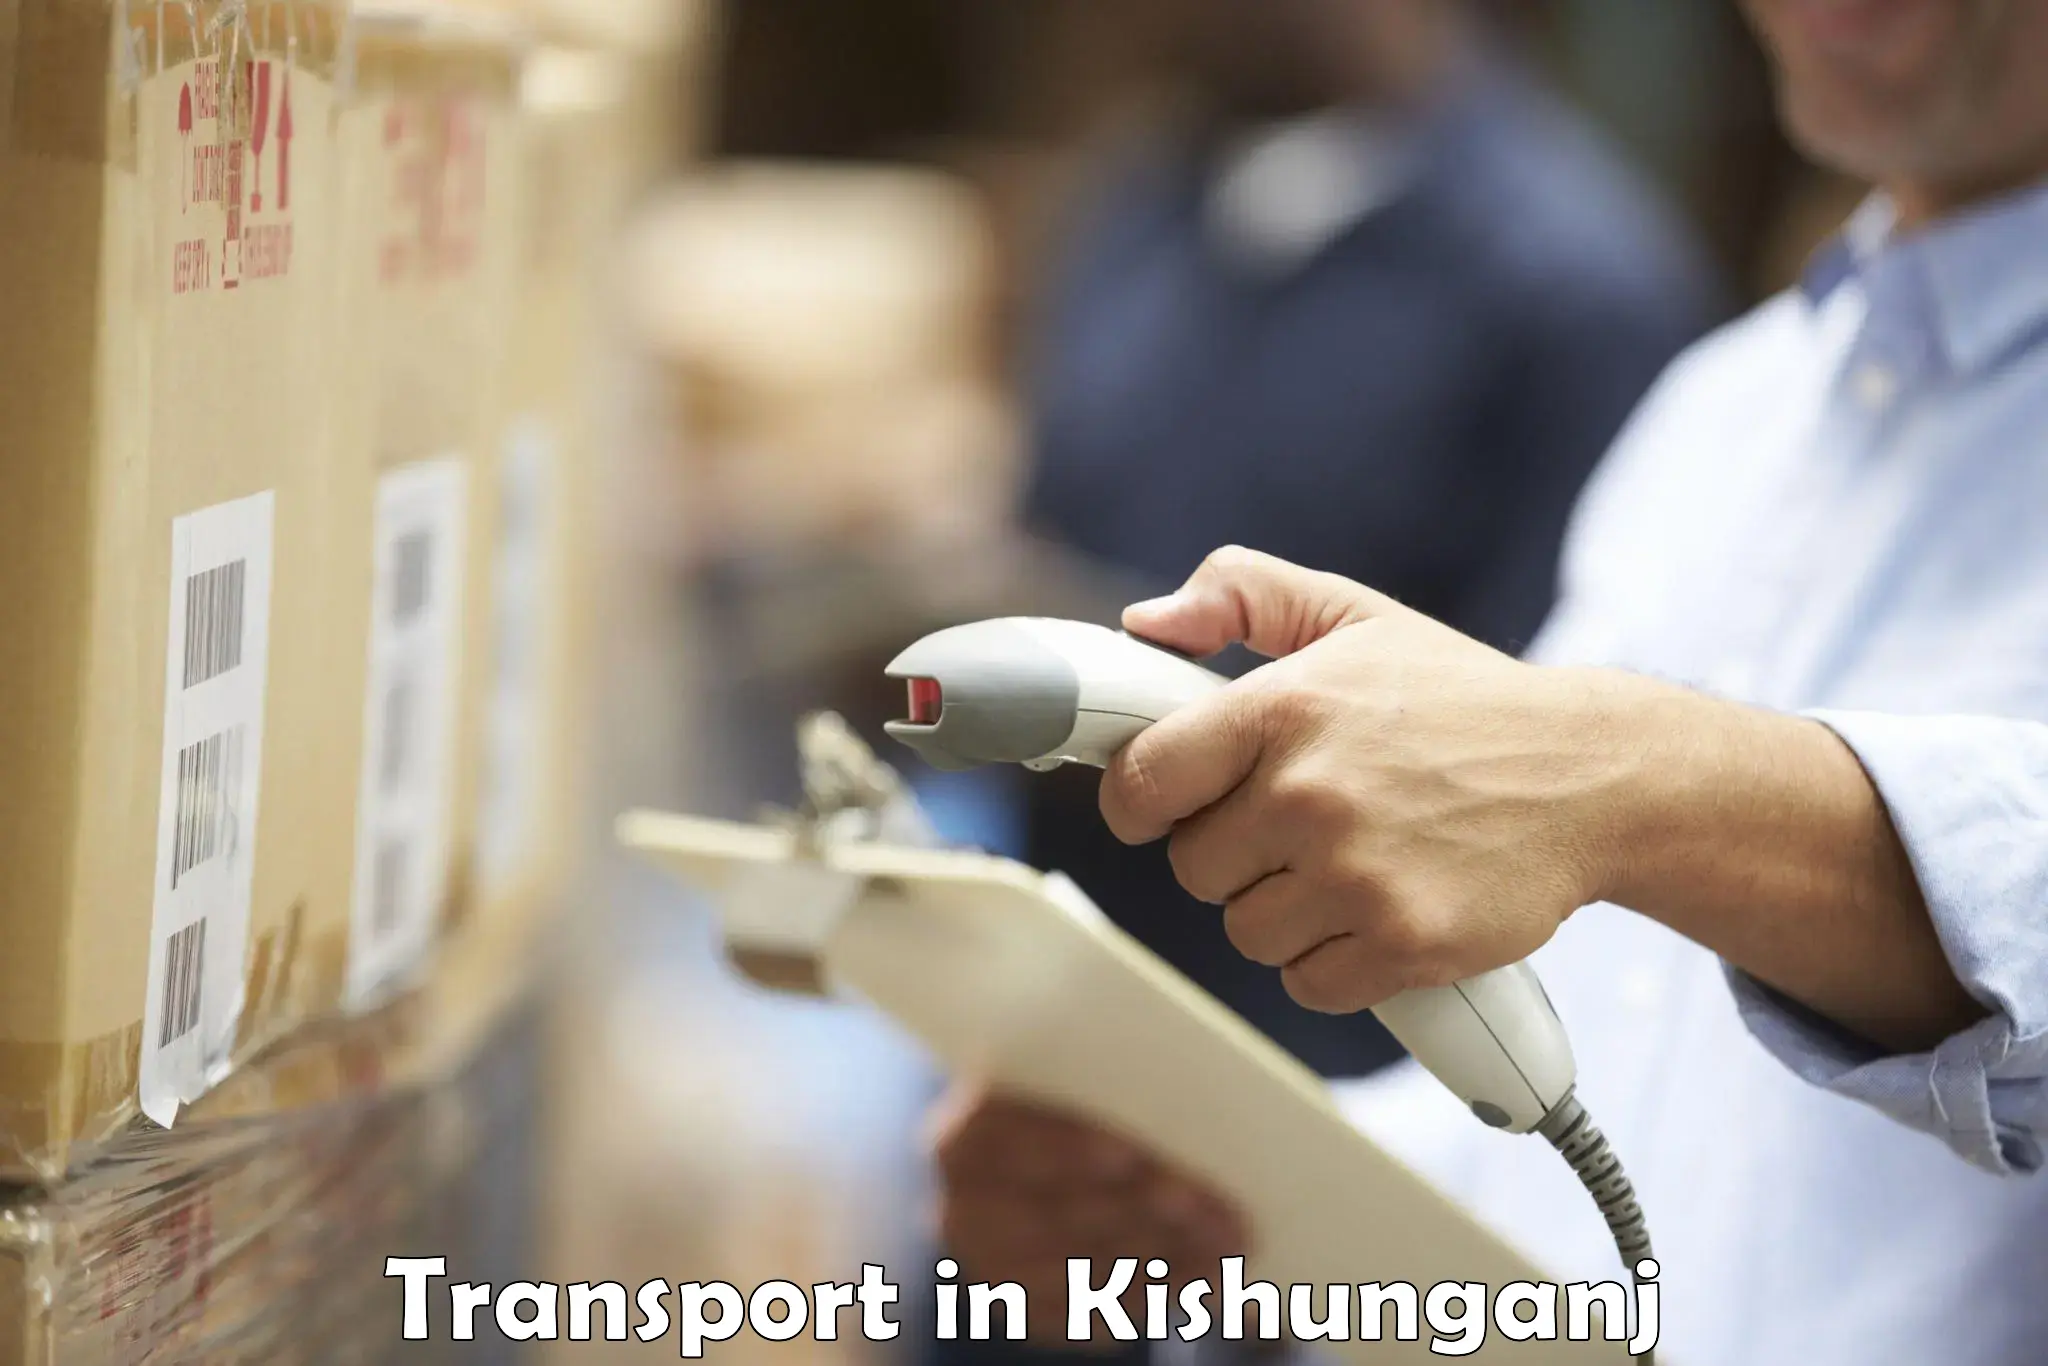 Furniture transport service in Kishunganj